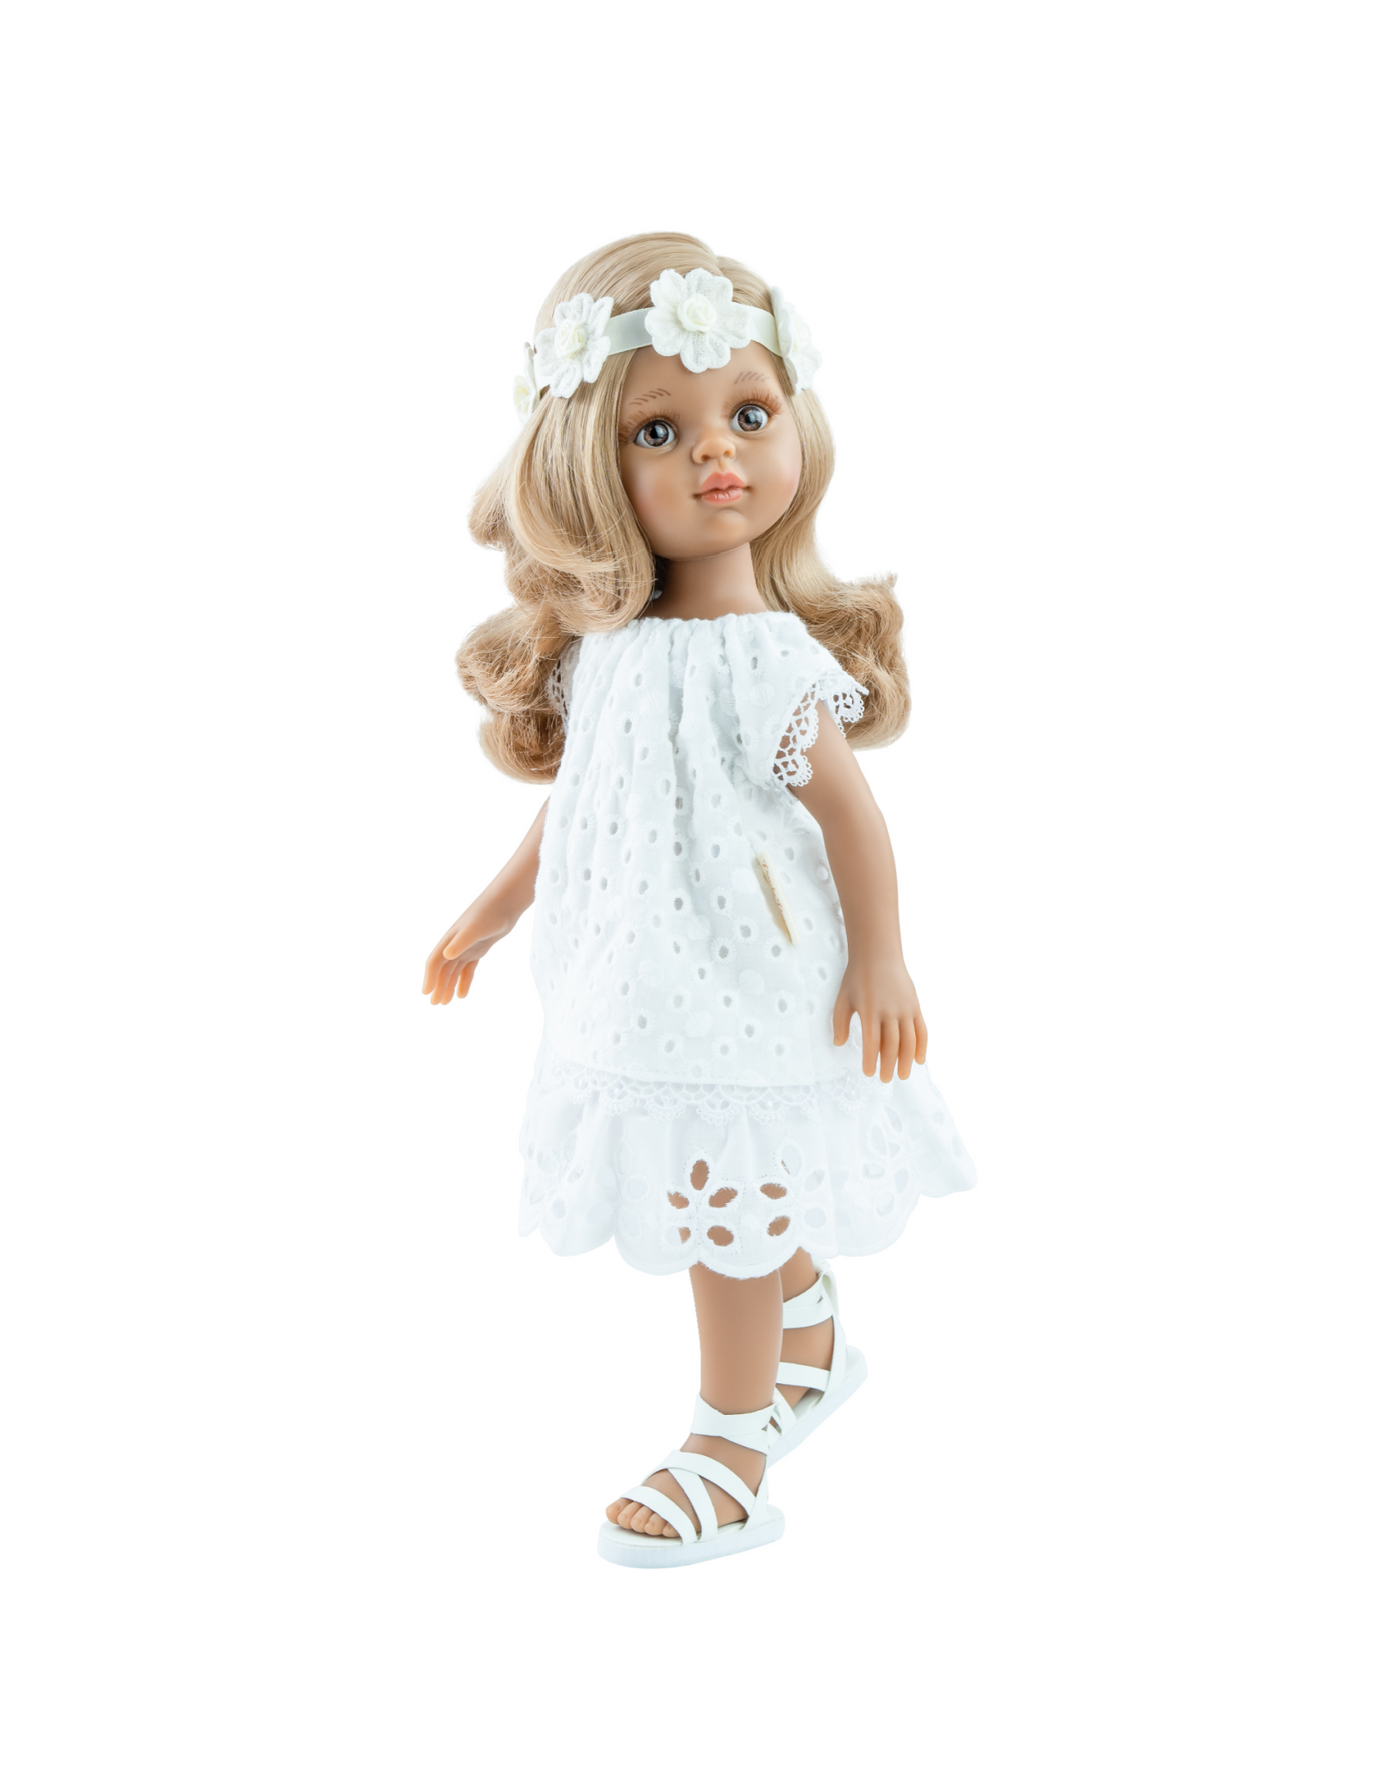 Las Amigas Doll - Luciana white dress and flower headband - Paola Reina